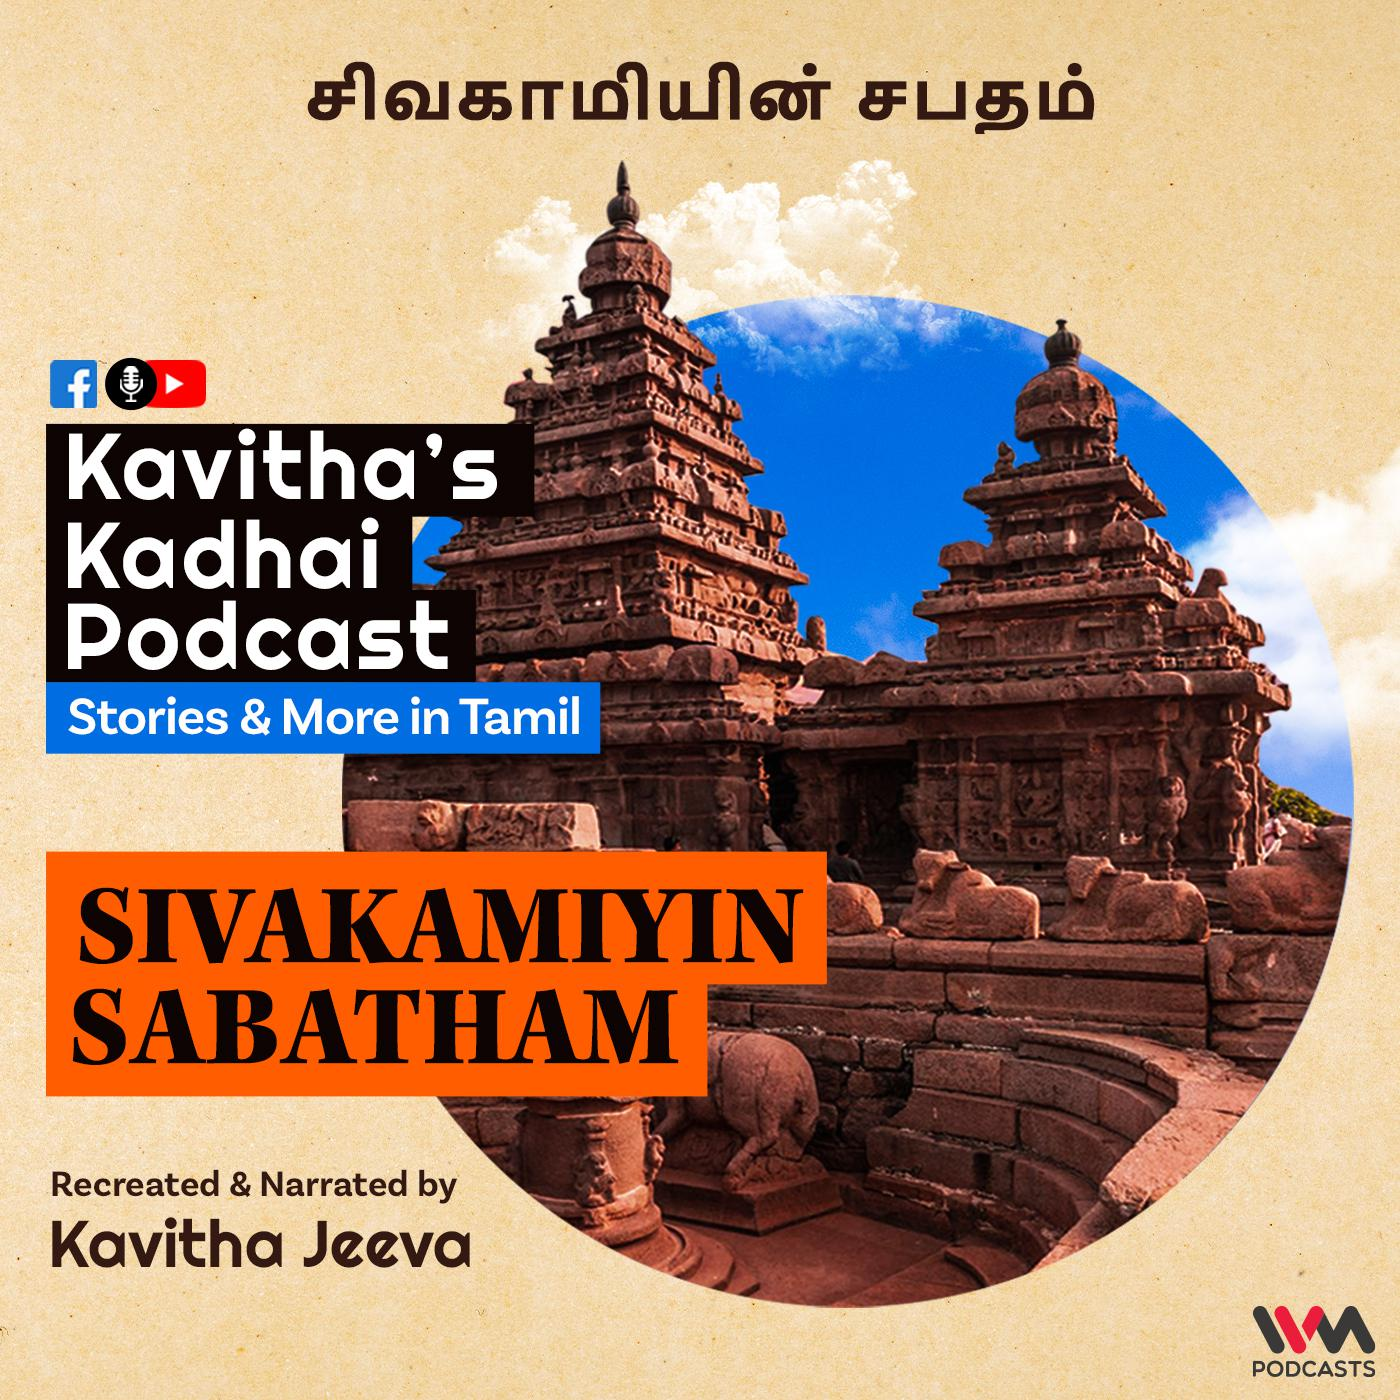 KadhaiPodcast's Sivakamiyin Sabatham with Kavitha Jeeva - Episode #111